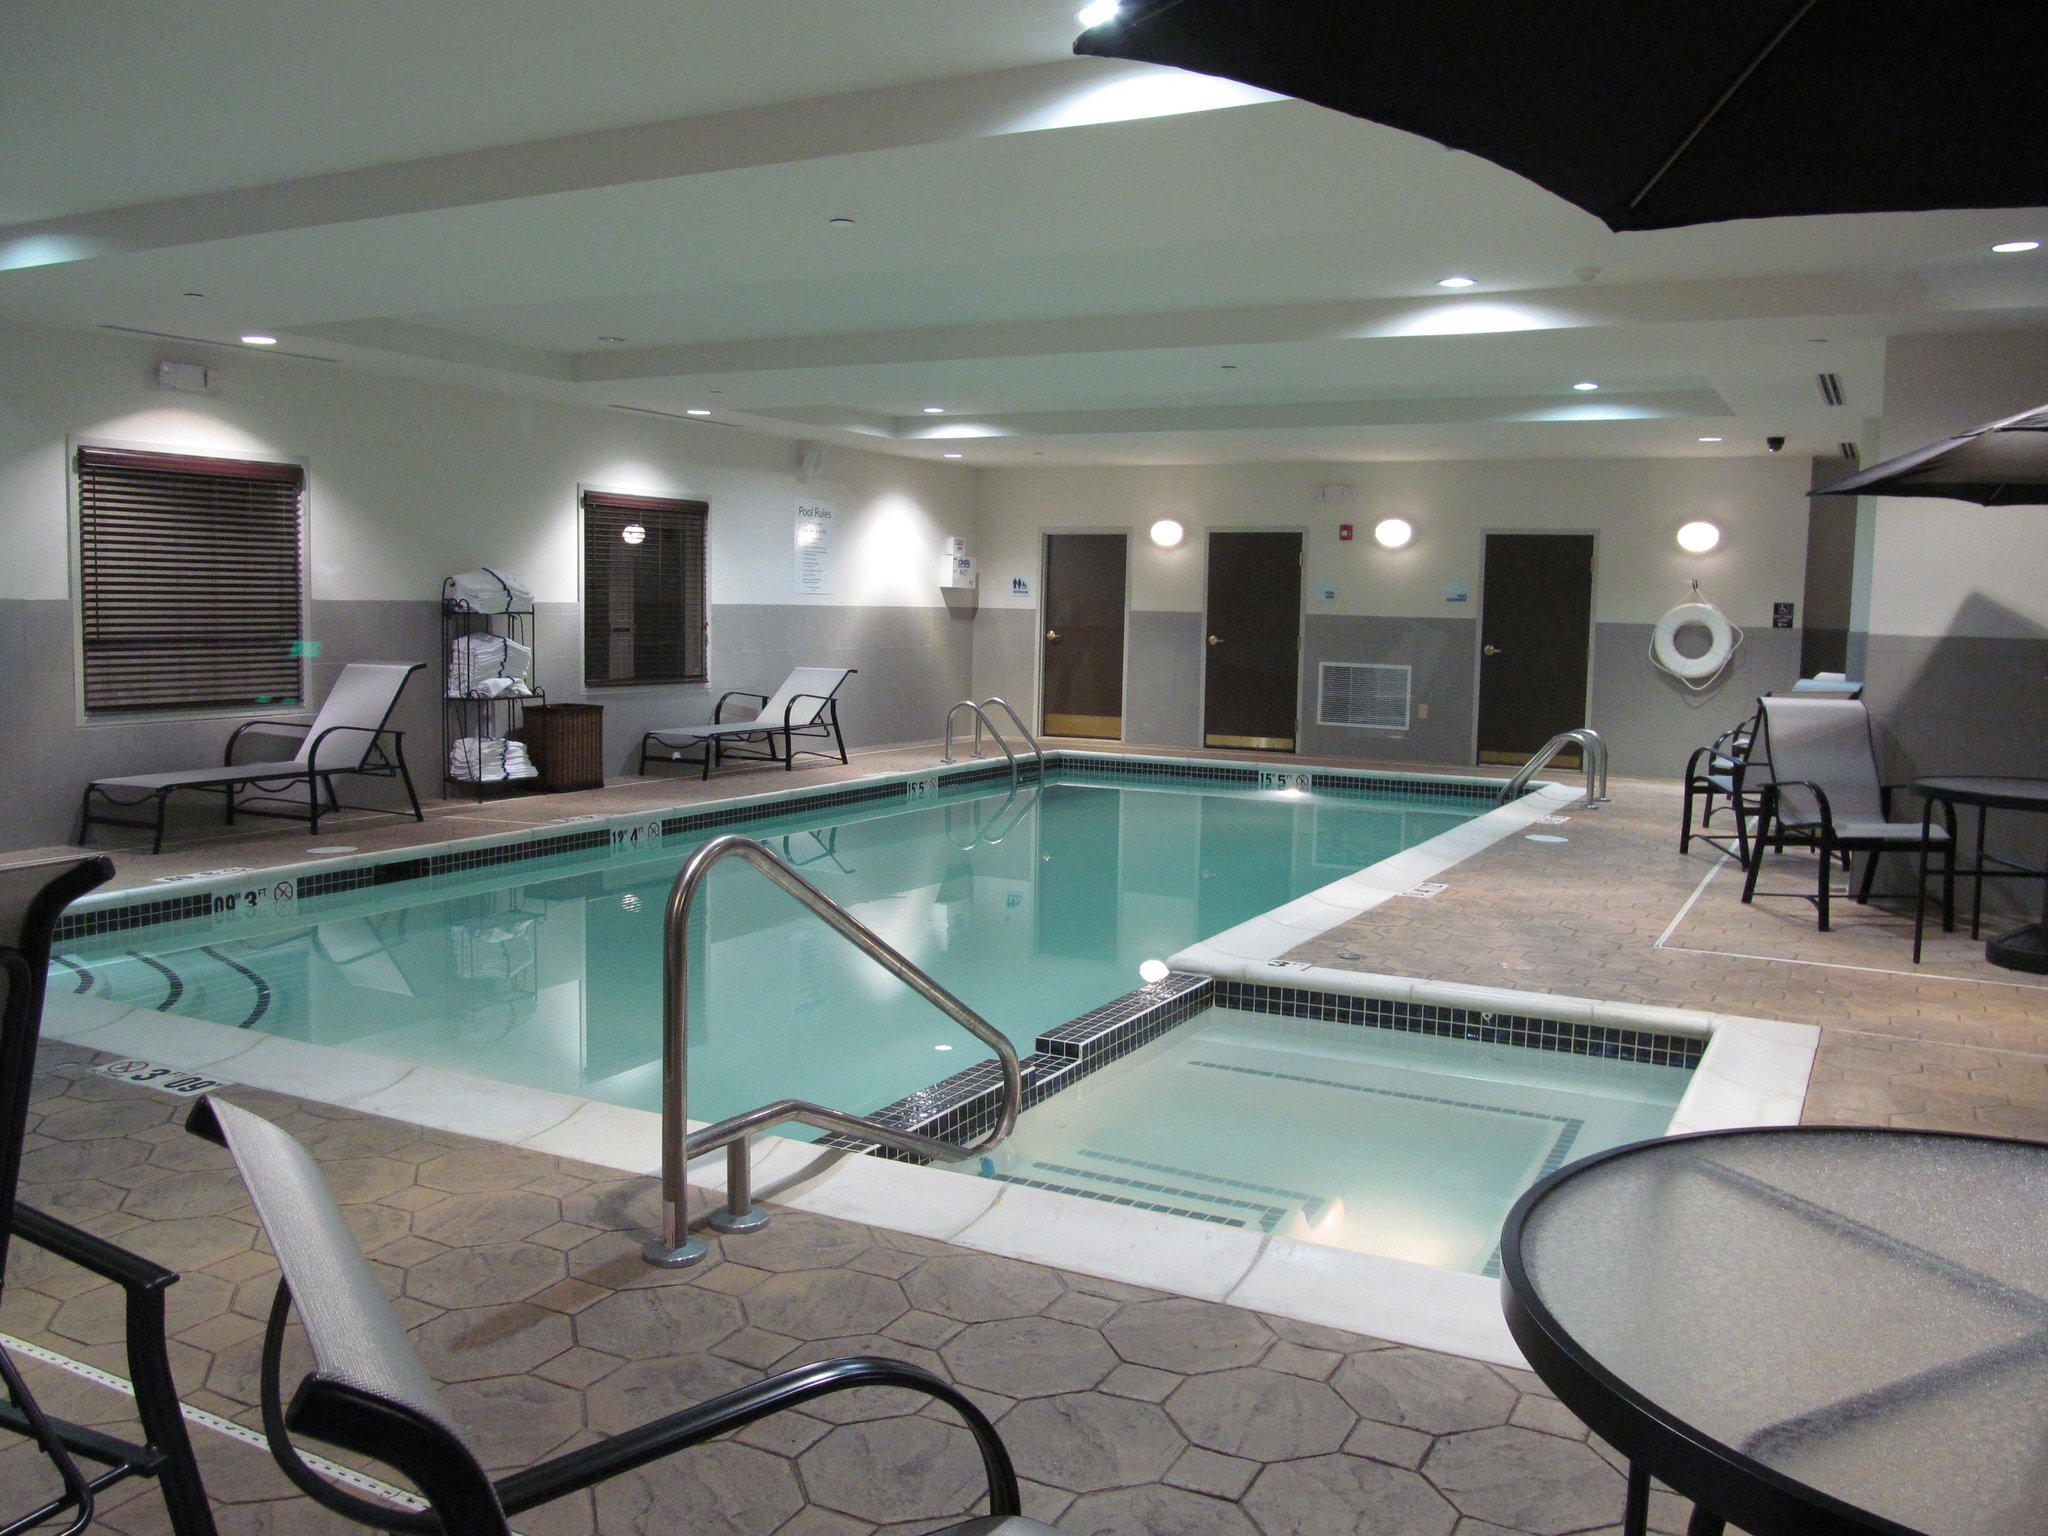 Holiday Inn Express & Suites Stroudsburg-Poconos Photo